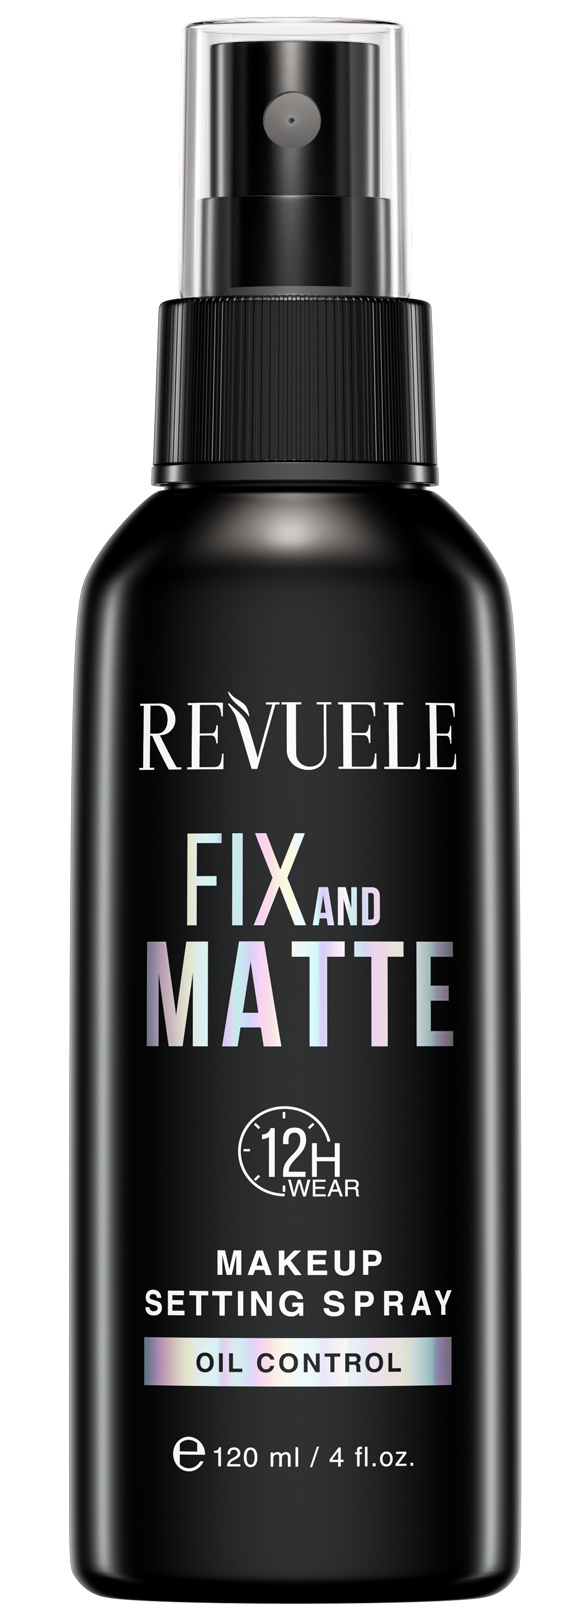 Revuele Fix And Matte Makeup Setting Spray